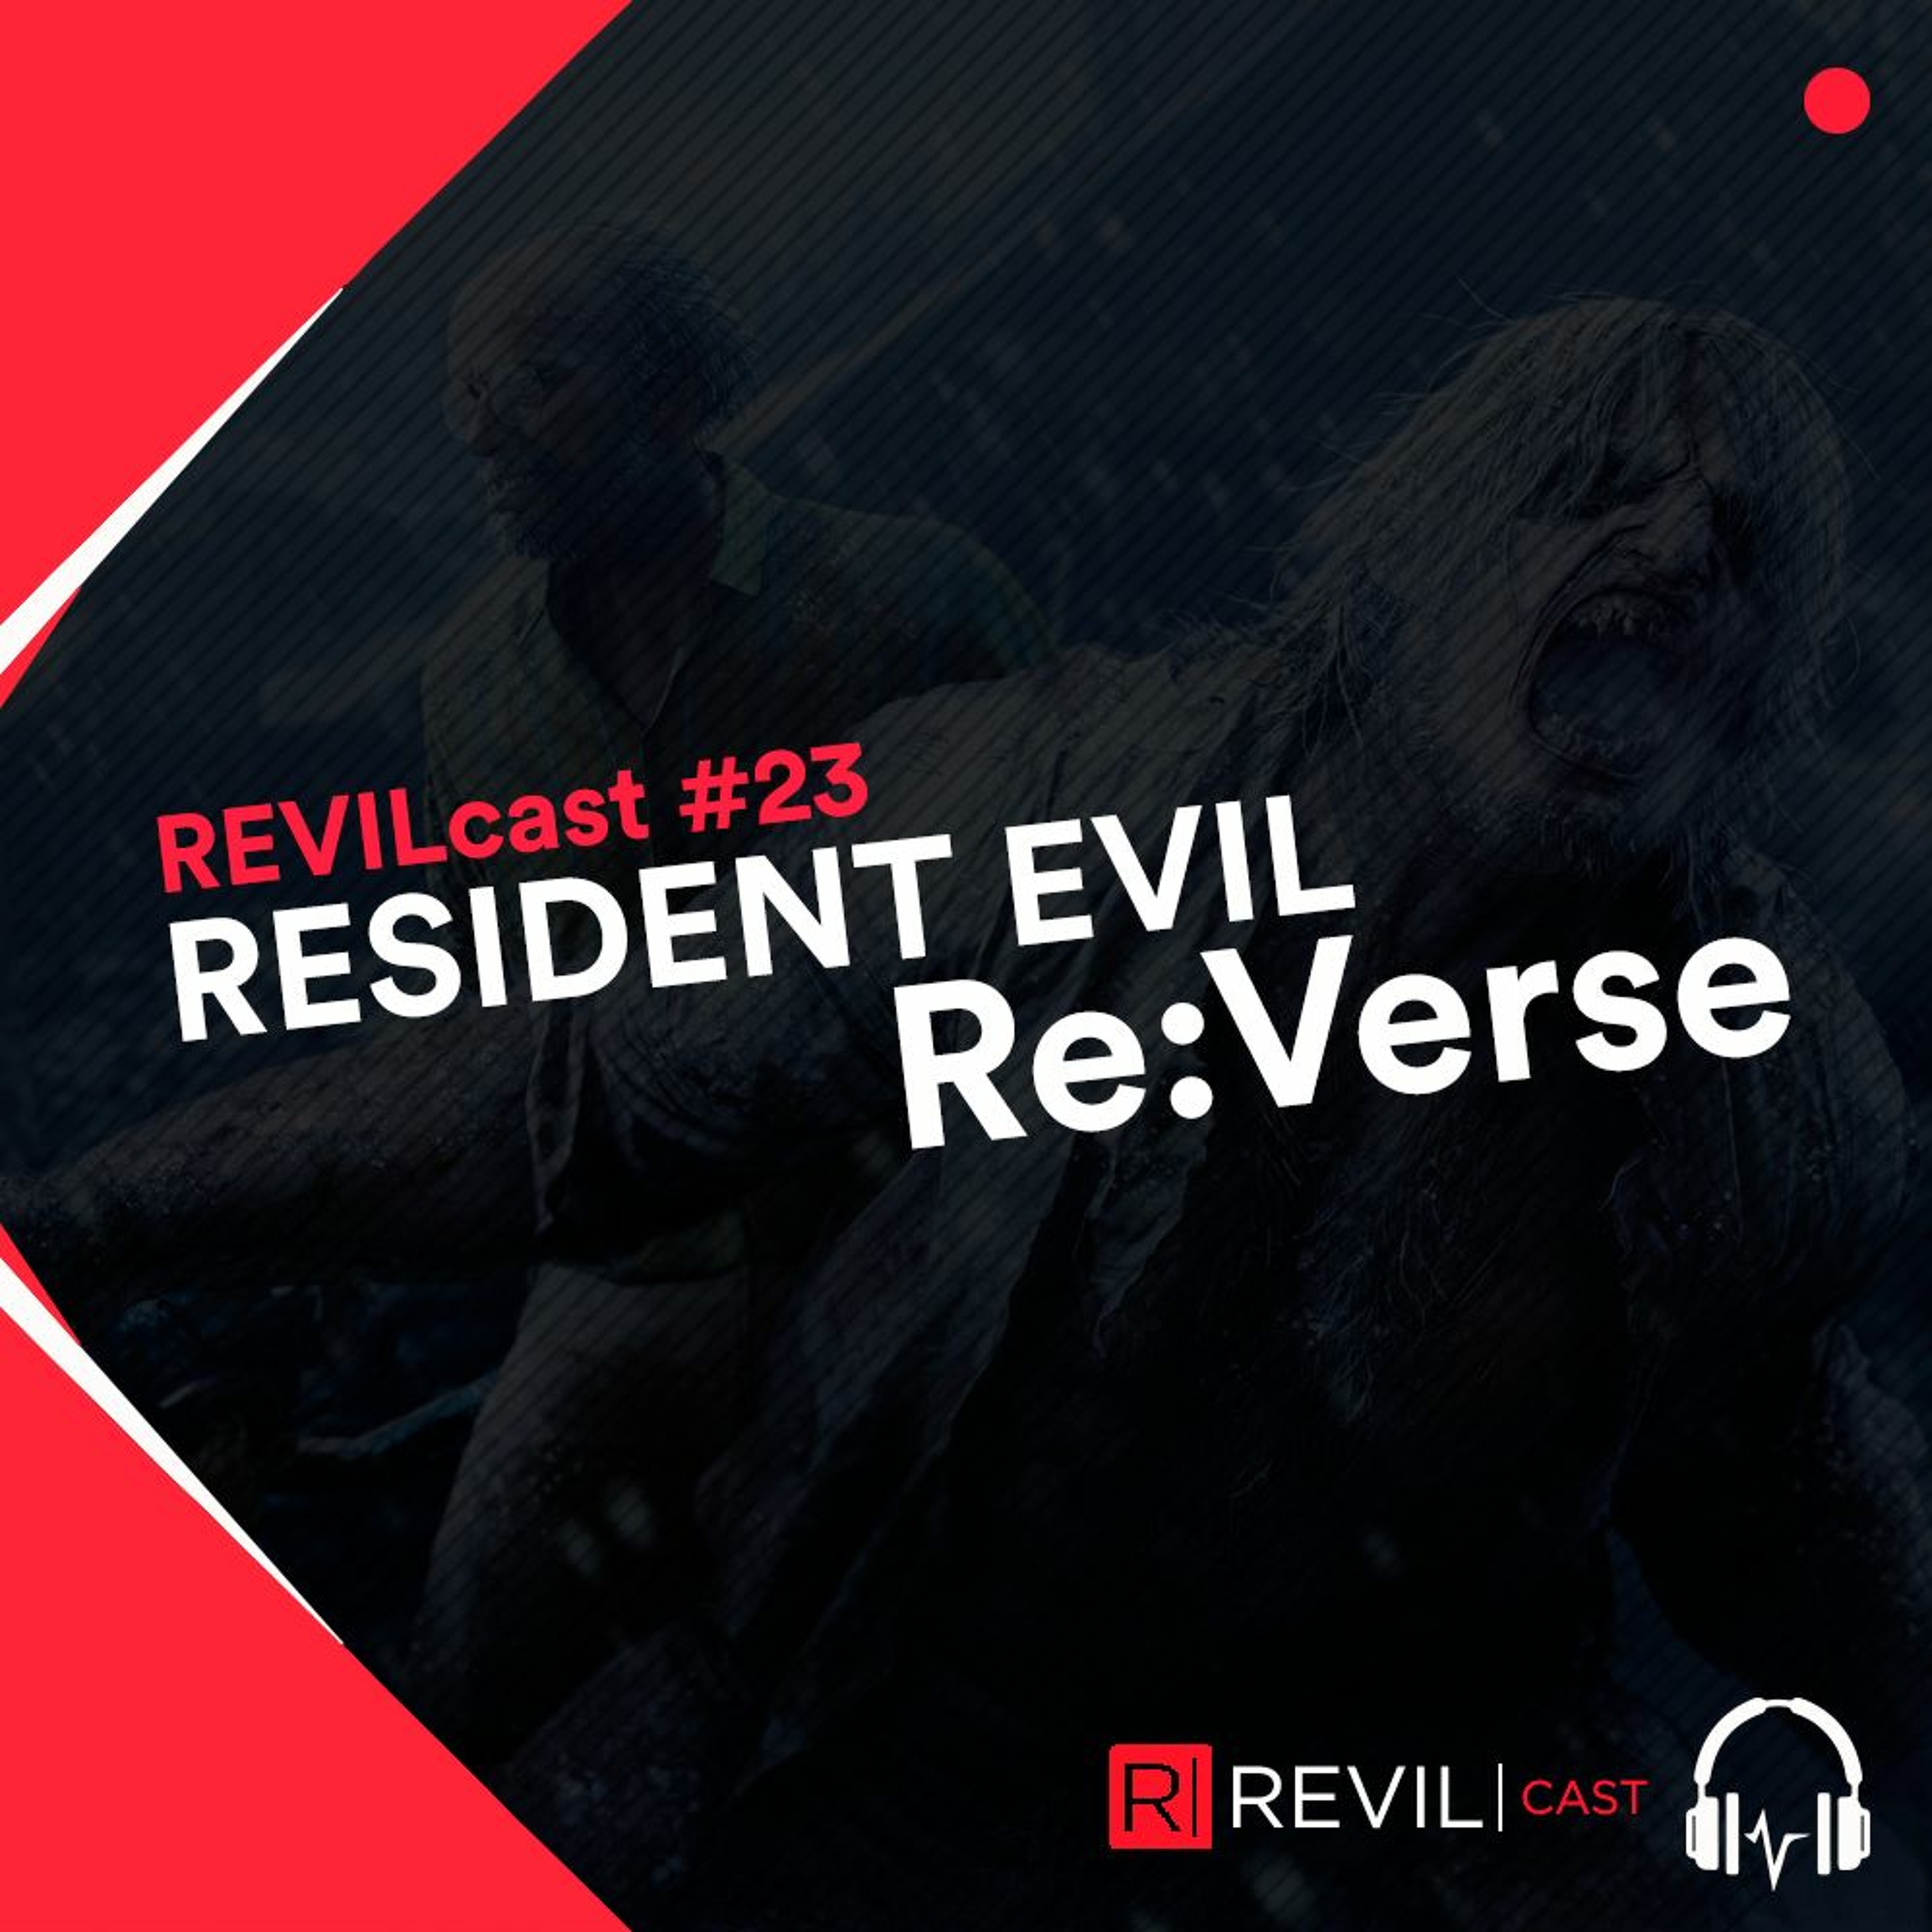 REVILcast #23 - Resident Evil Re:Verse